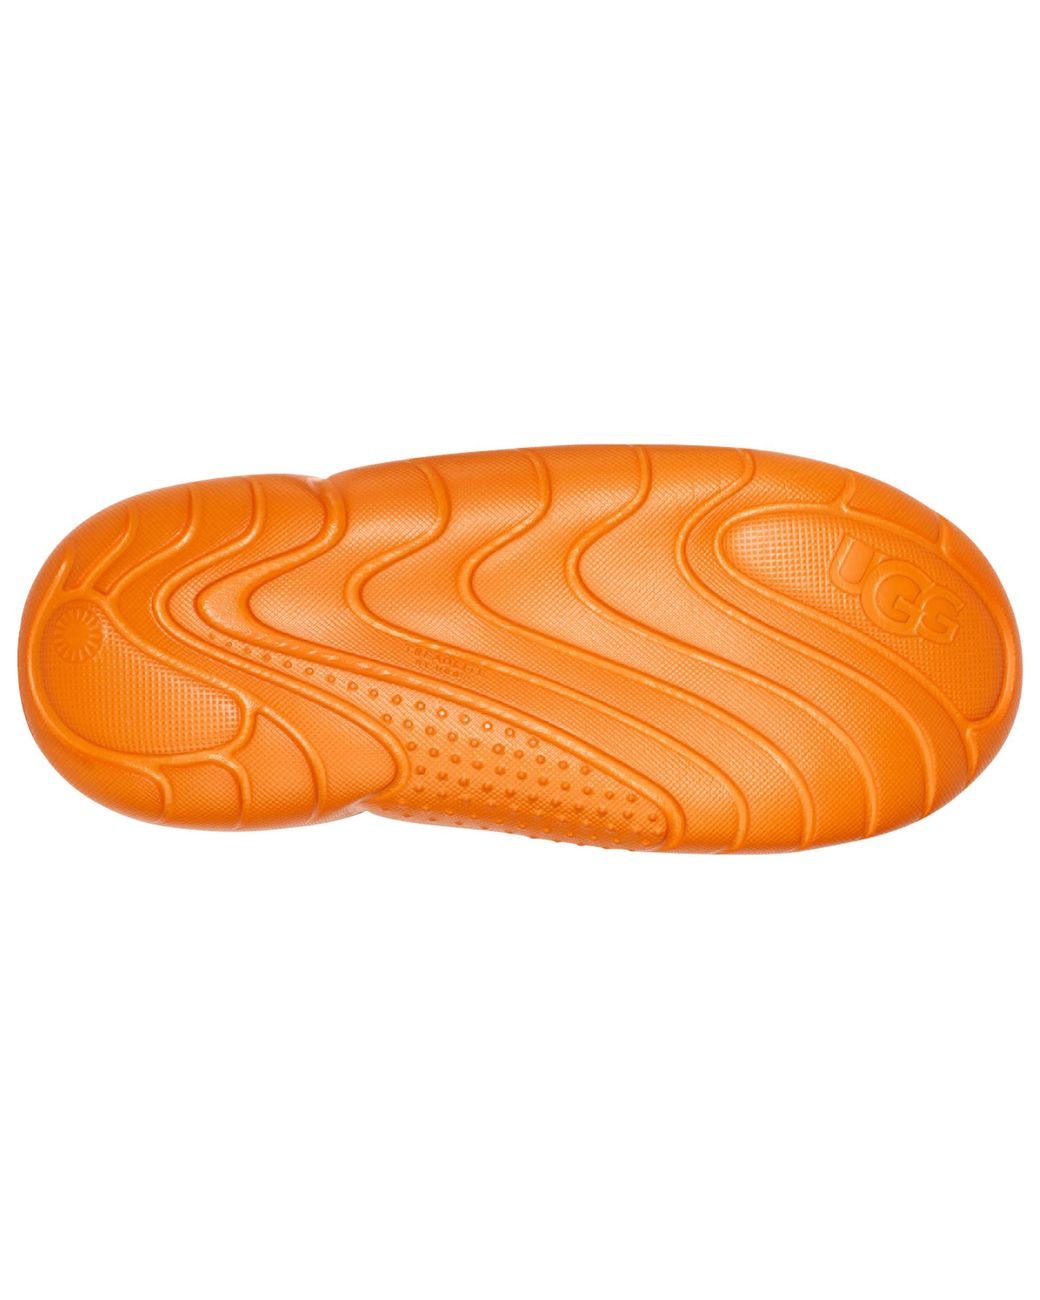 UGG Cloud Sandal in Orange/Orange (Orange) - Save 46% | Lyst